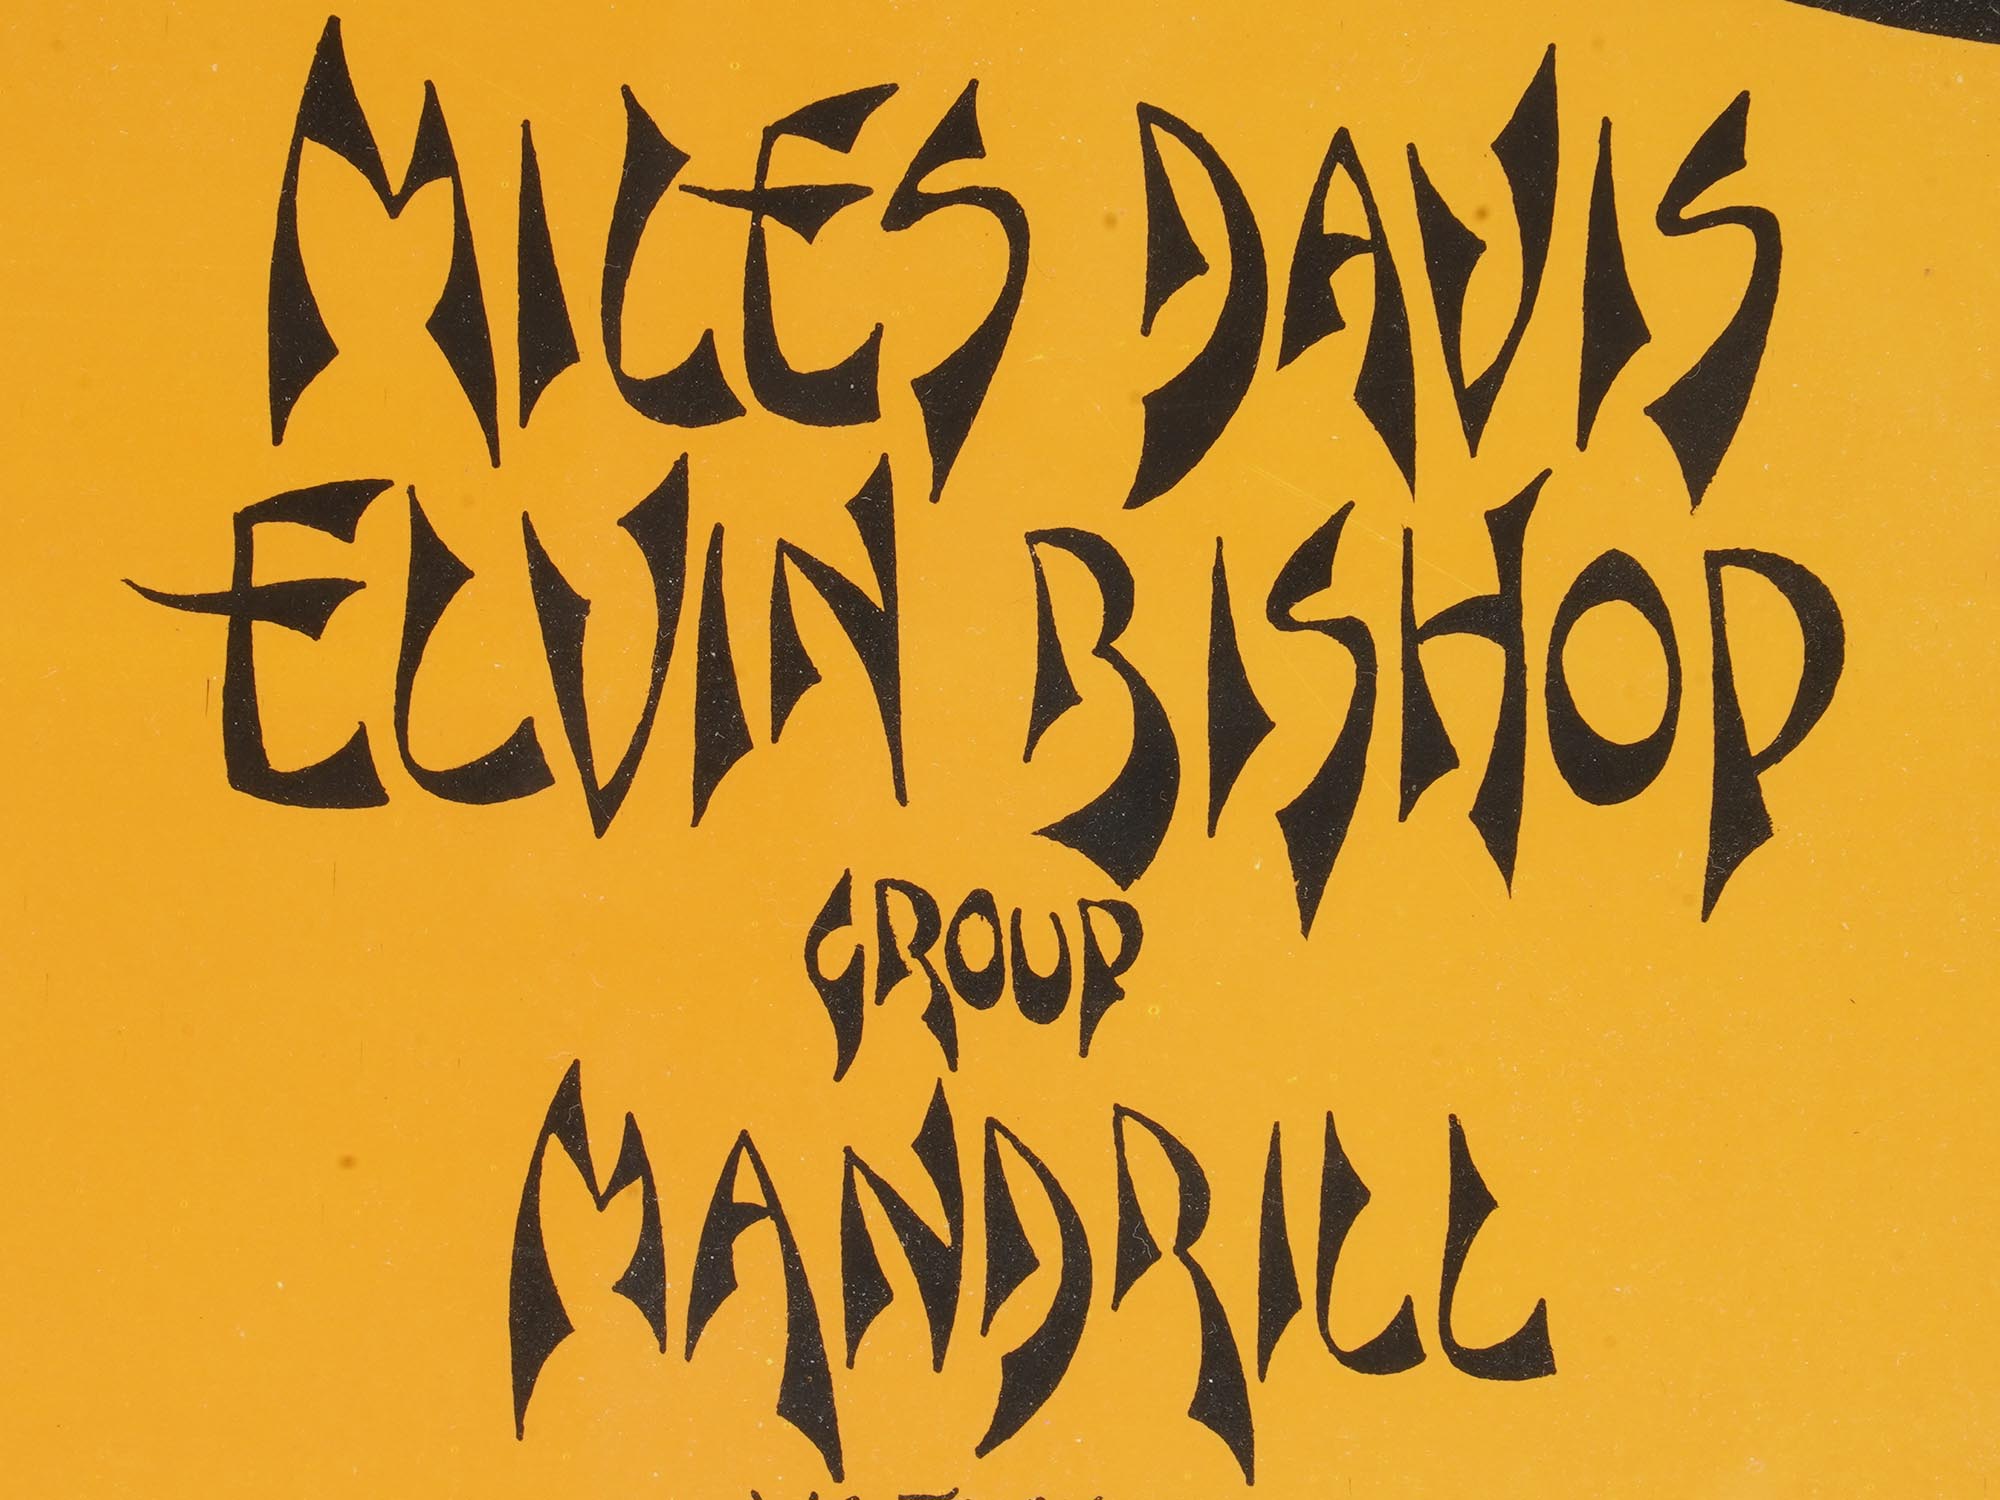 1971 MILES DAVIS ELVIN BISHOP MANDRILL SHOW PRINT PIC-3